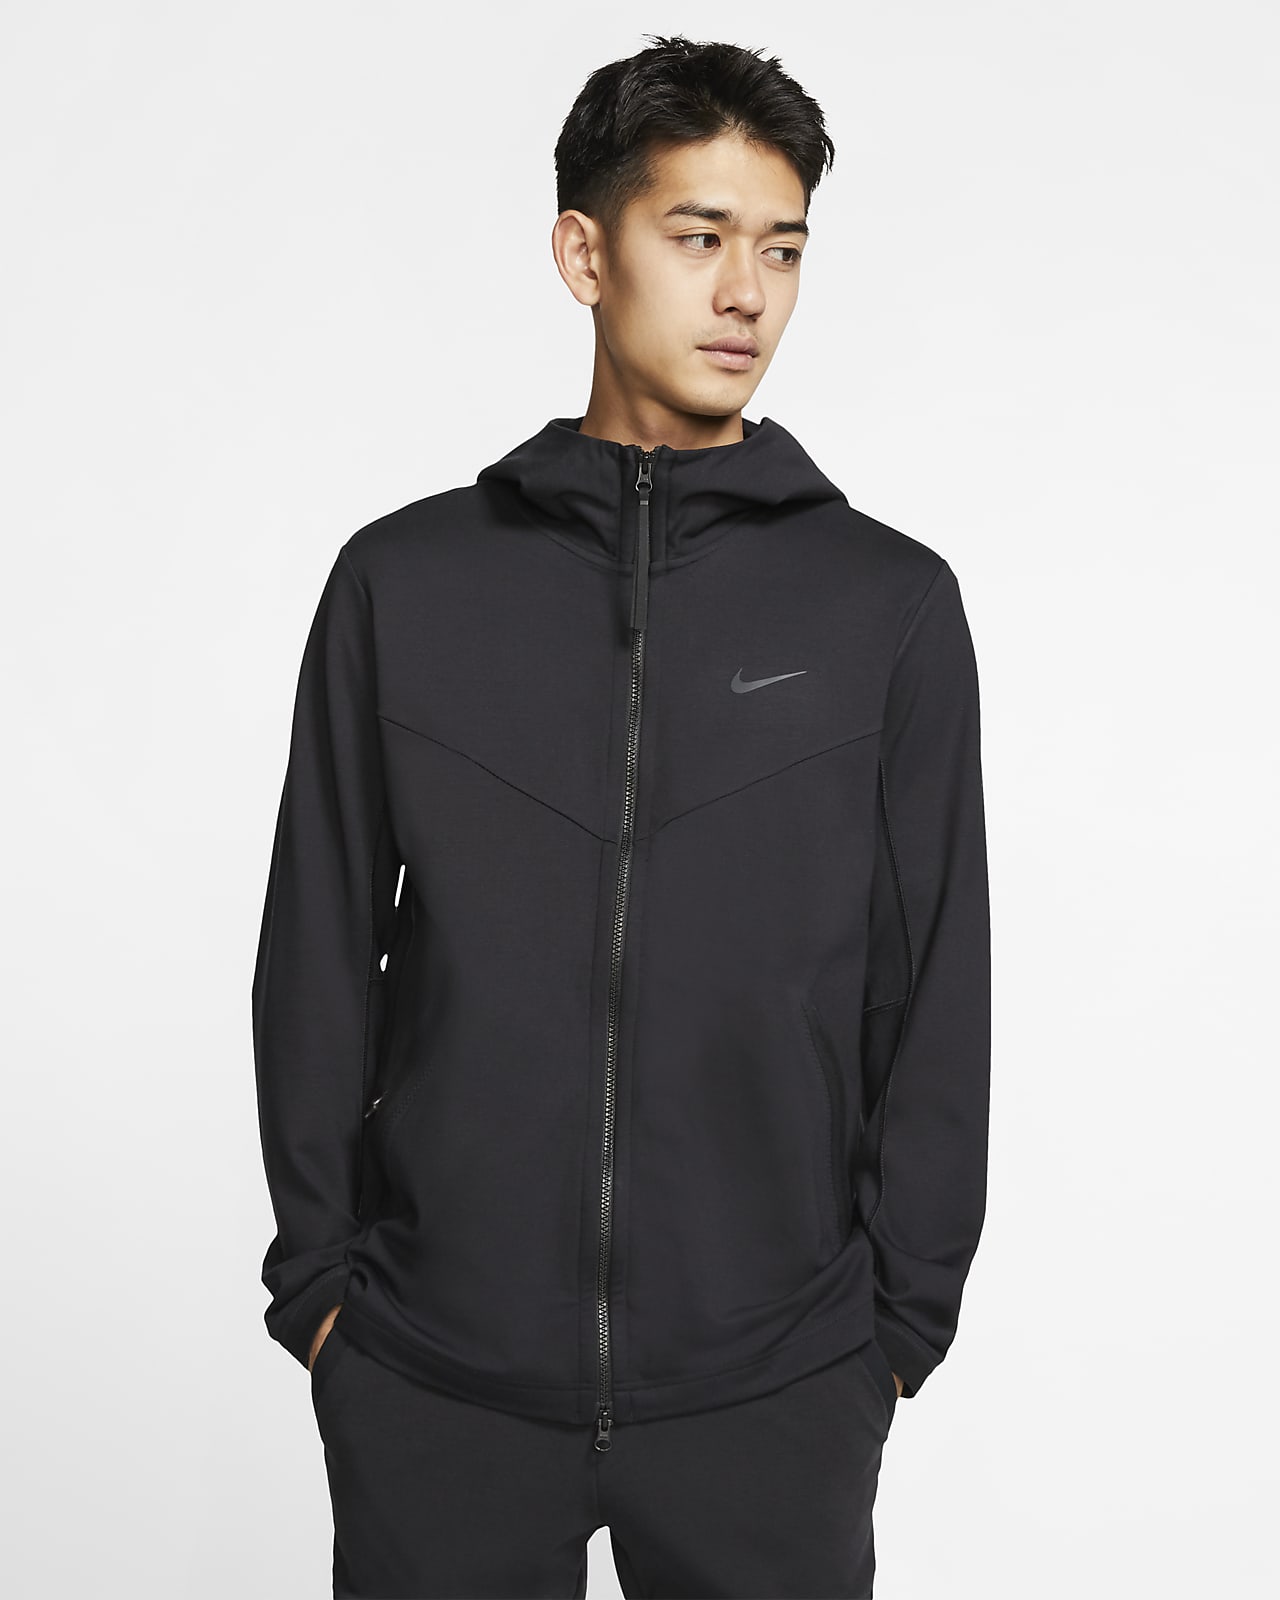 Hooded Full-Zip Jacket. Nike SA